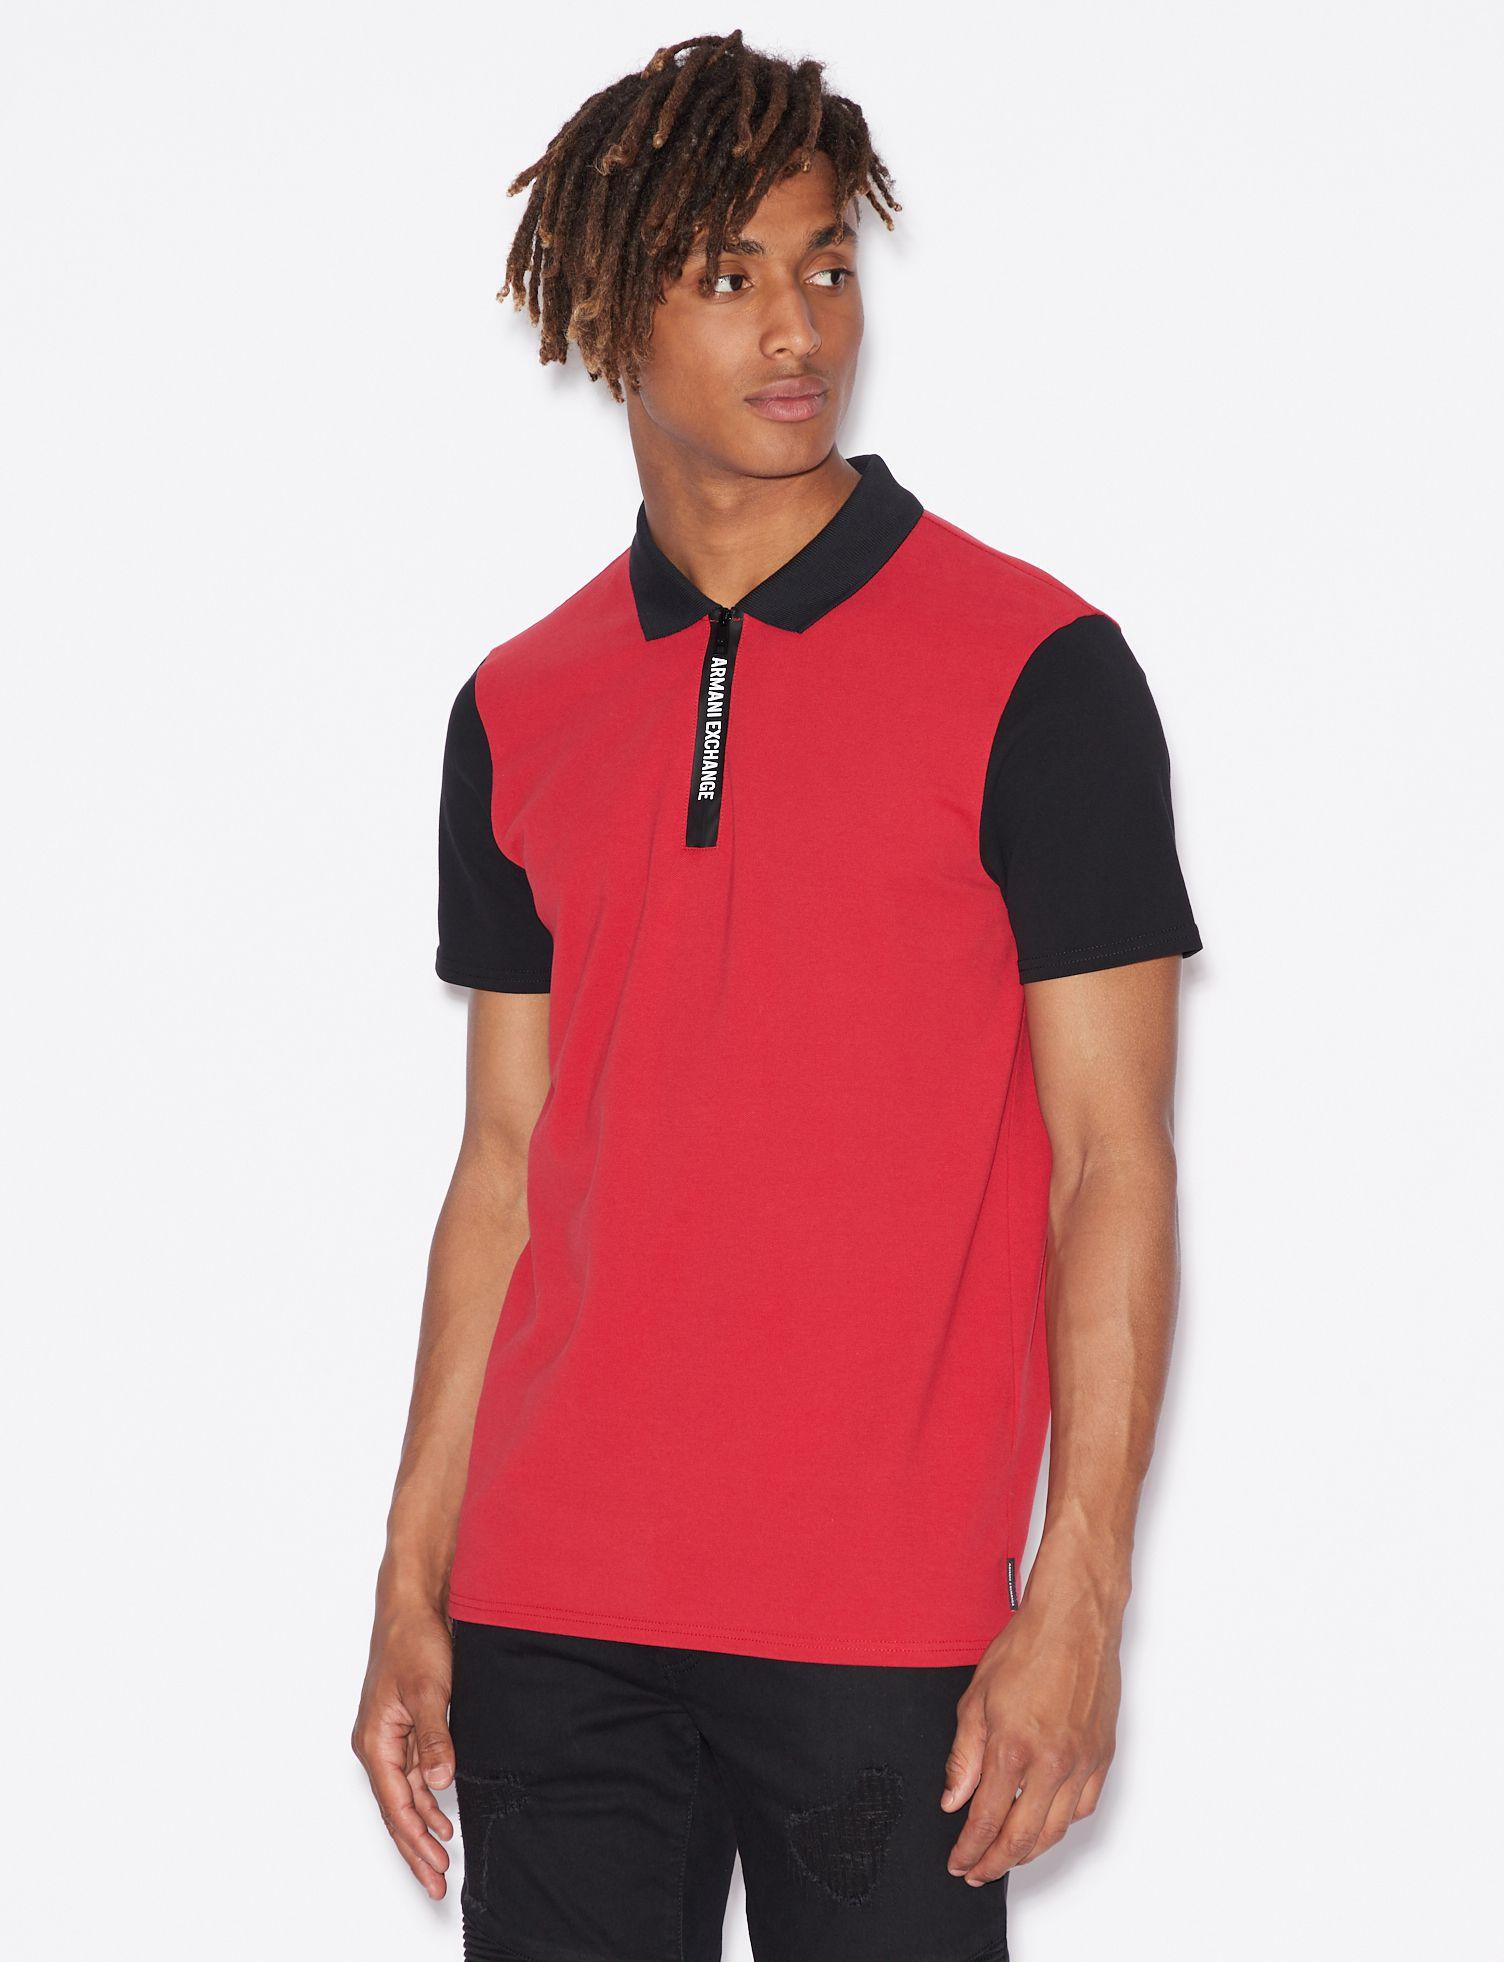 Armani Exchange Cotton Logo Placket Red Polo Shirt for Men - Save 20% ...